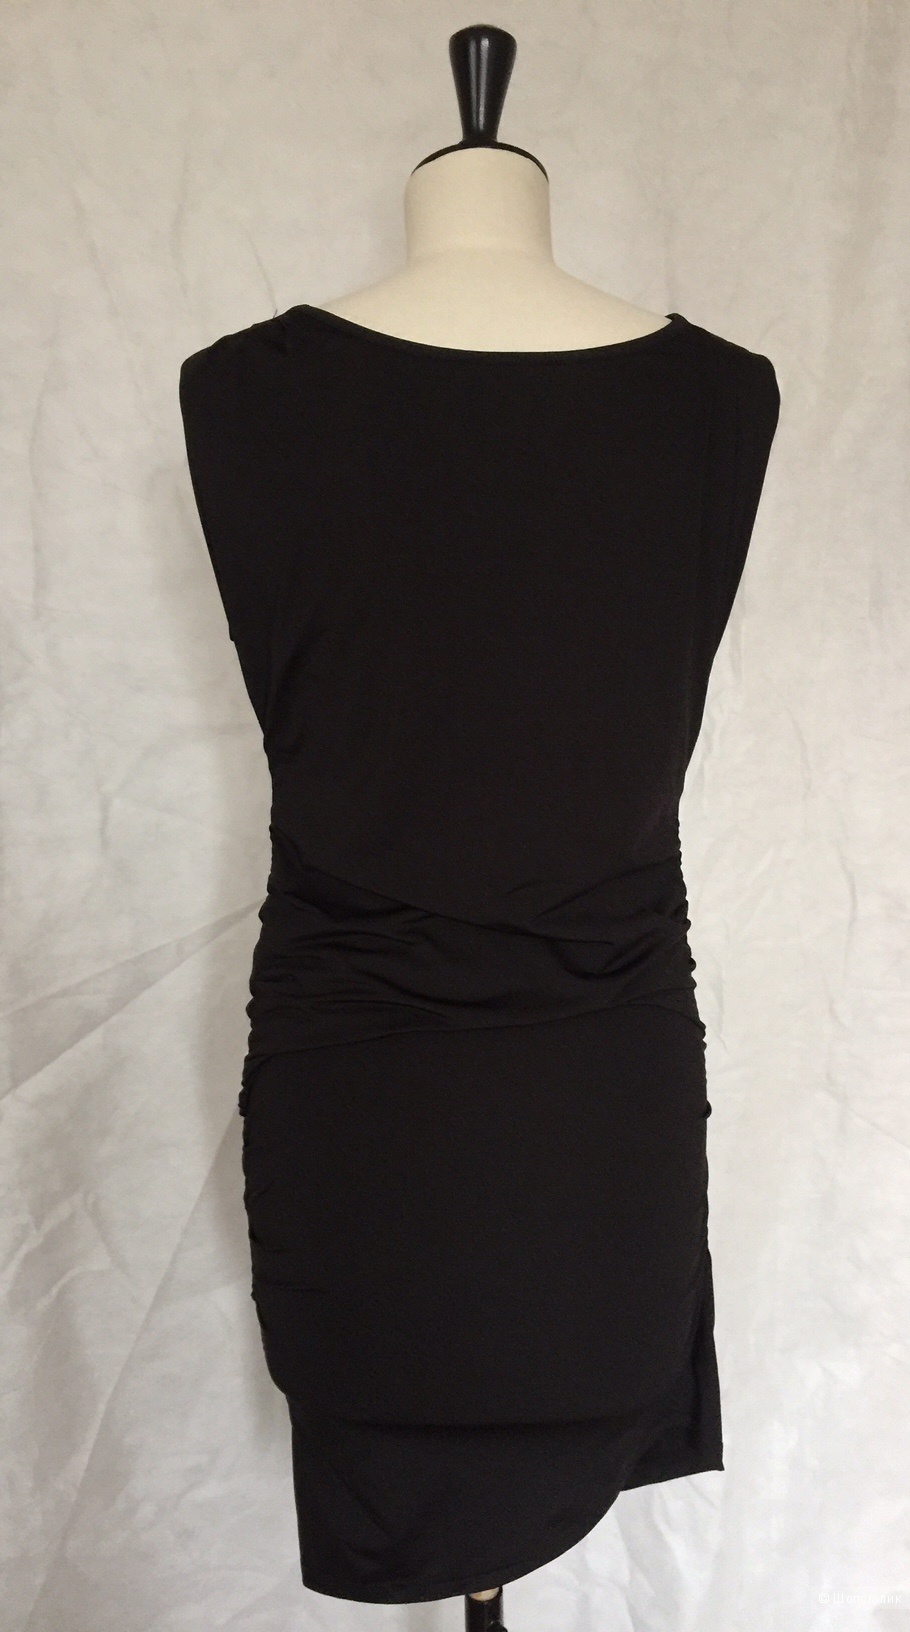 Черное платье футляр  марки 3 suissescollection размер xs